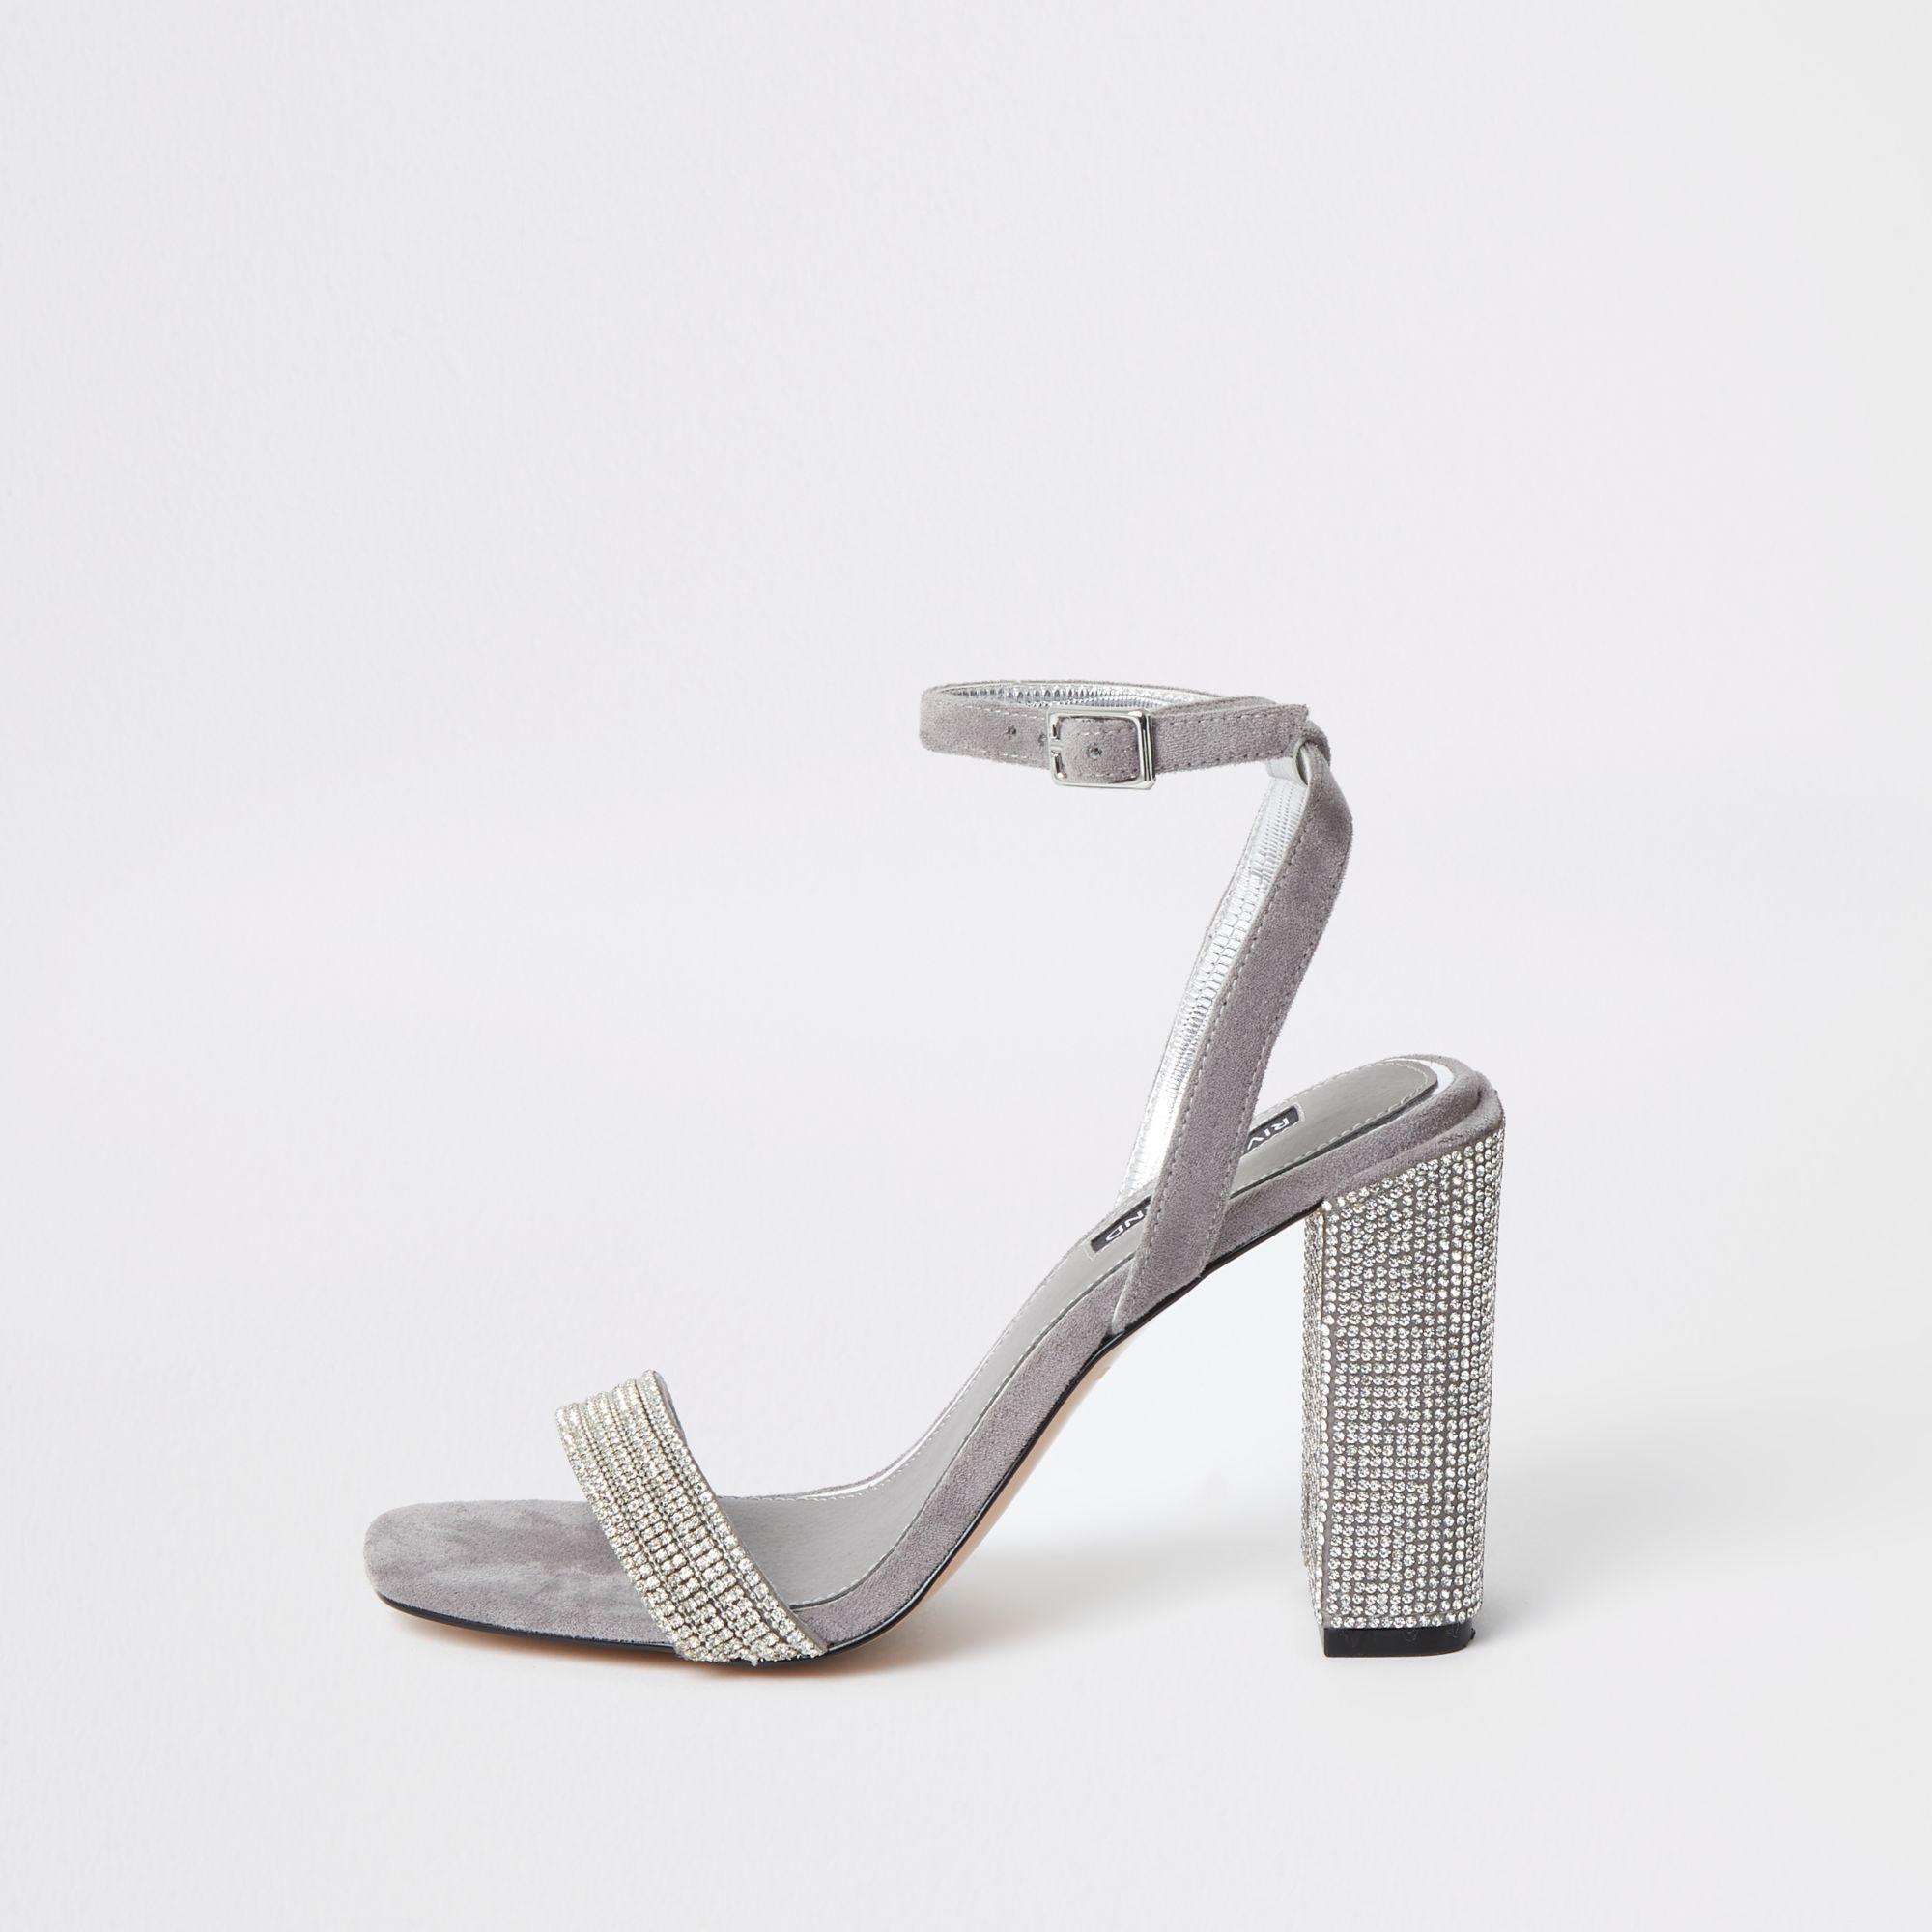 River Island Diamante Embellished Block Heel Sandal in Grey (Gray) - Lyst